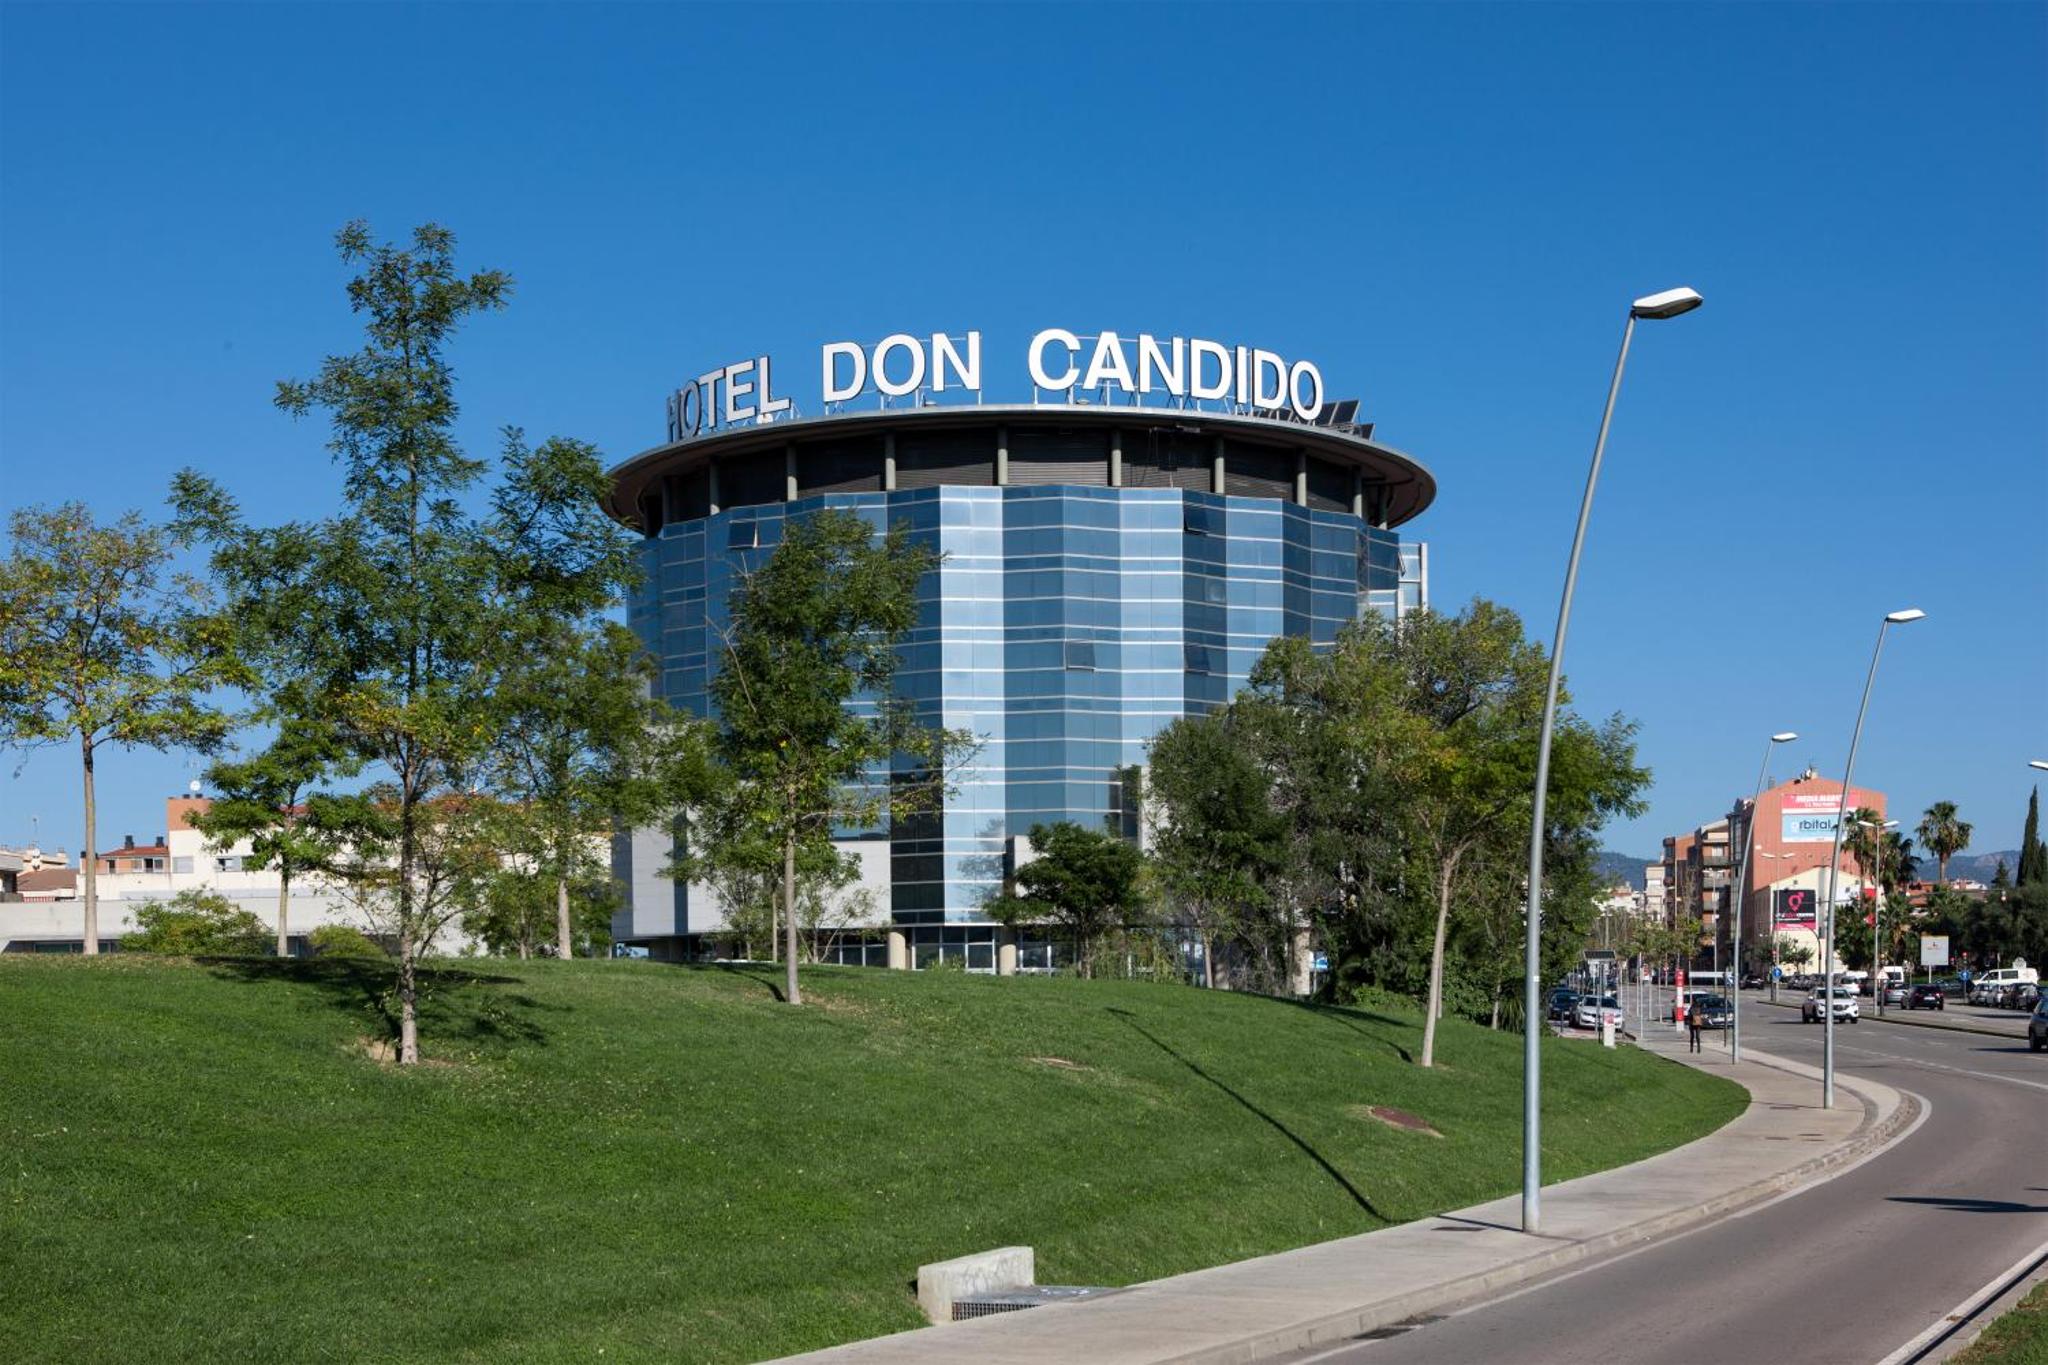 Don Candido